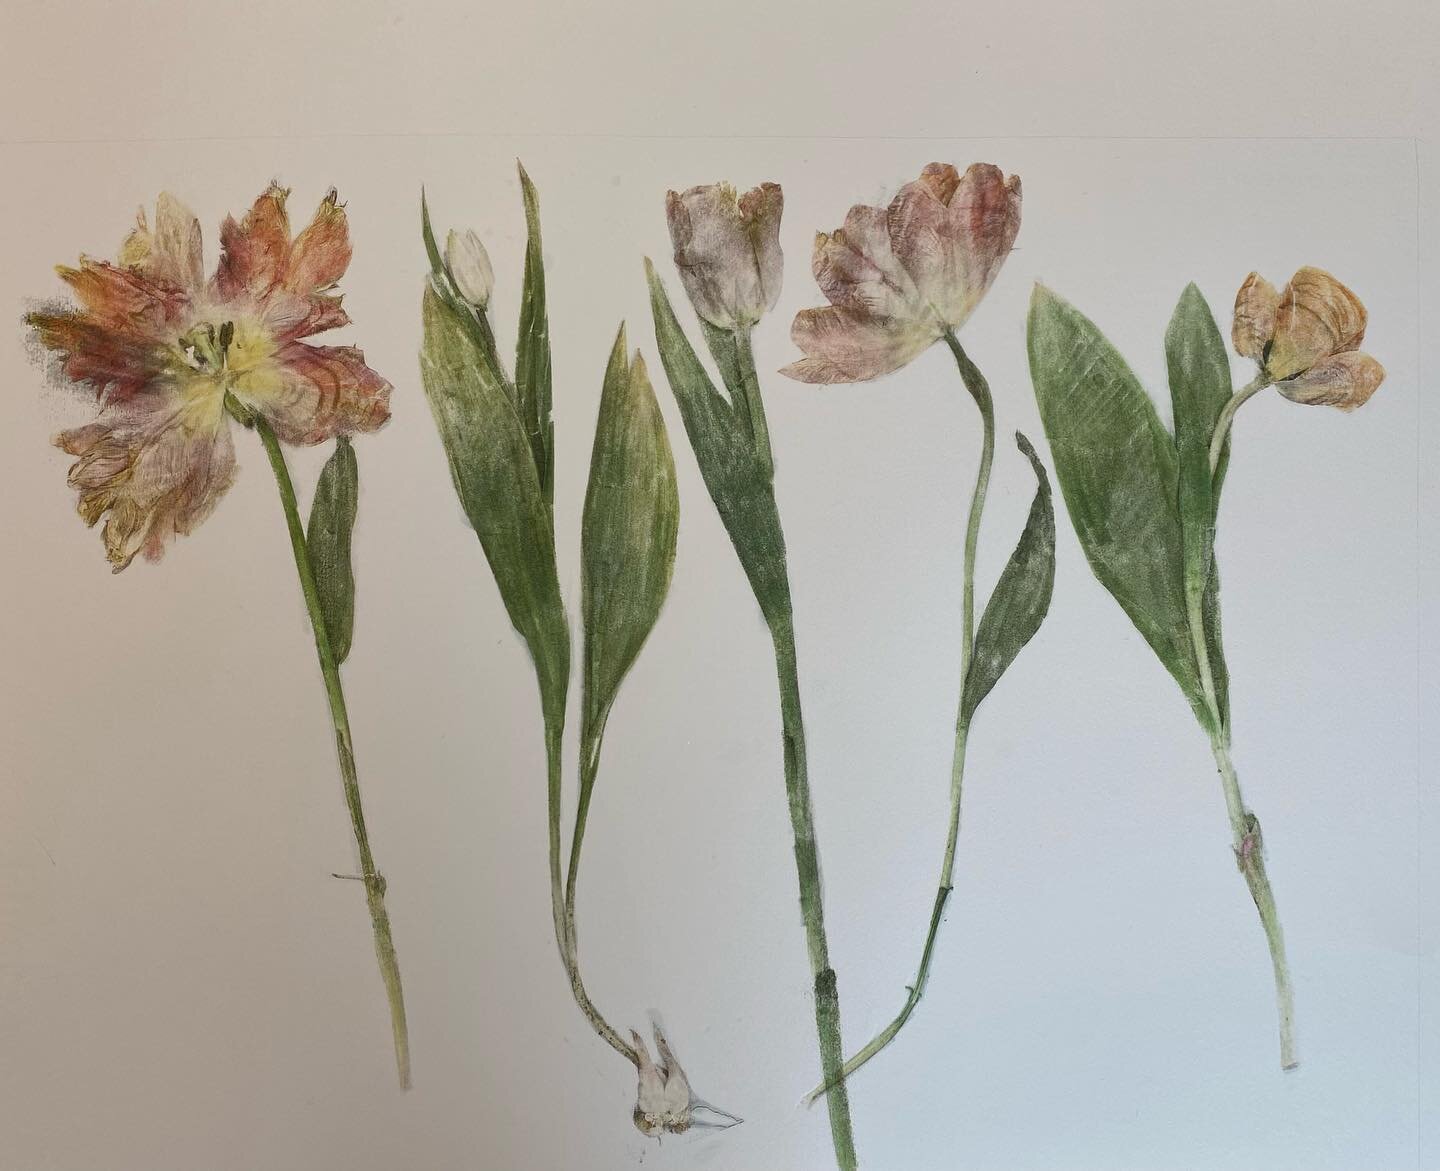 Some experiments for a possible tulip wallpaper 🌷 #tulipwallpaper #tuliptextiles #pressedflowers #printedflowers #wallpaper